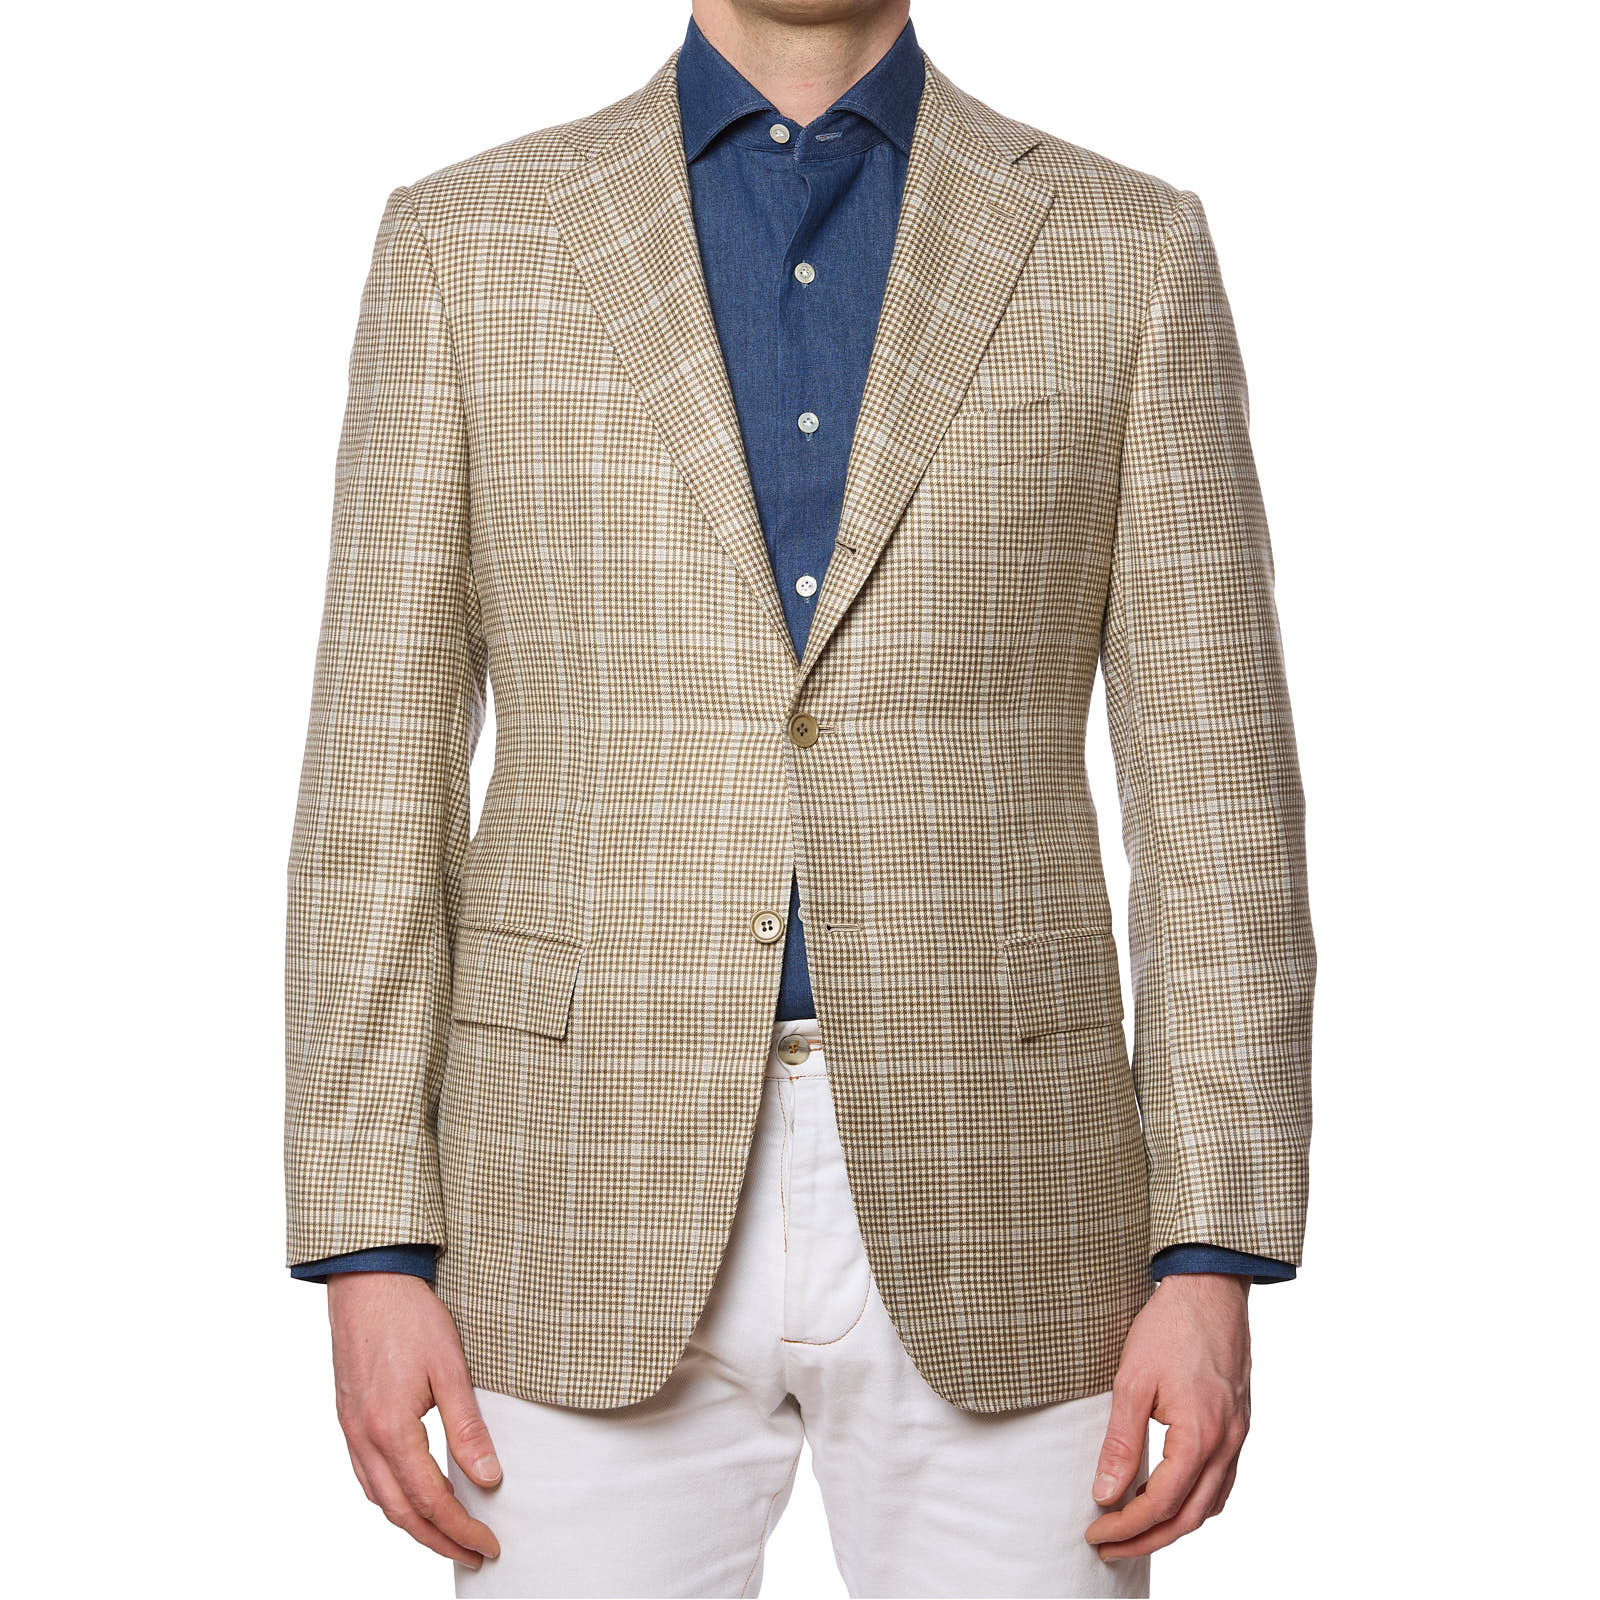 KITON Napoli for VANNUCCI Handmade Beige Plaid Cashmere Jacket EU 50 NEW US 40